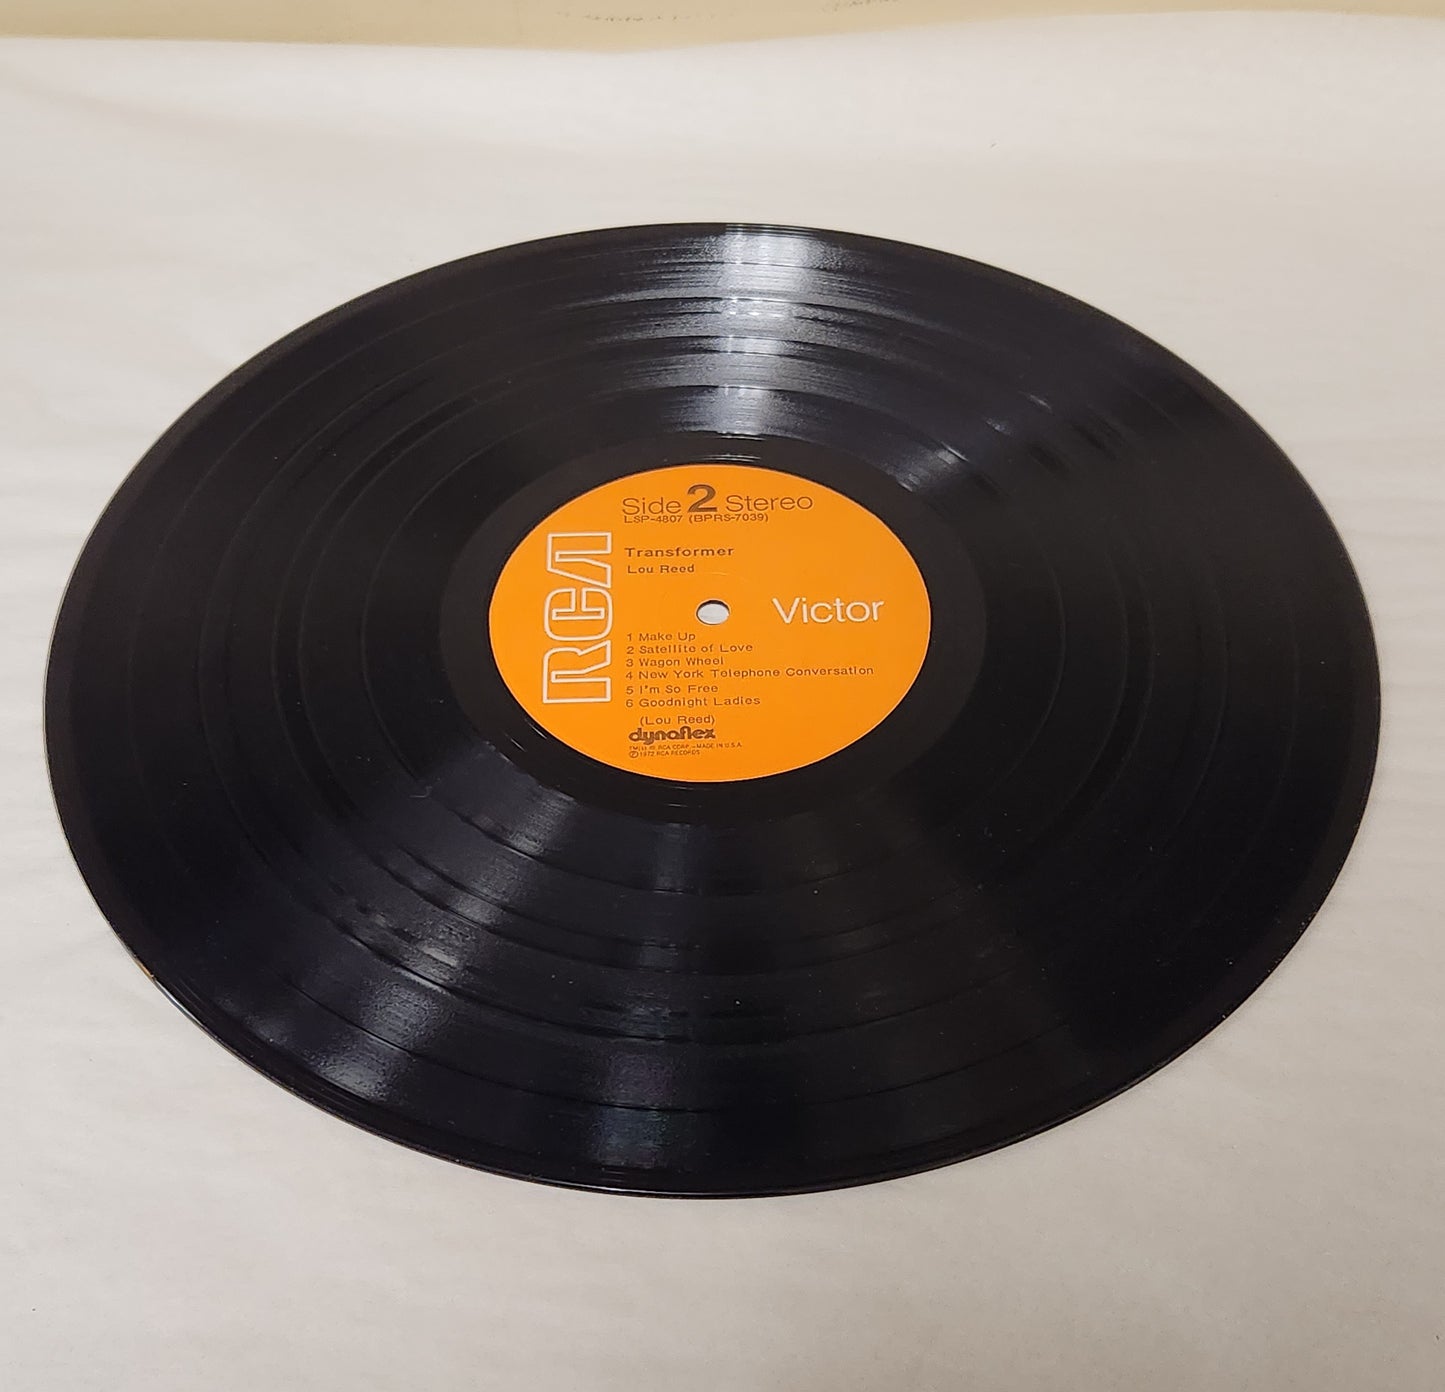 Lou Reed "Transformer" 1972 Original Pressing Glam Rock Record Album